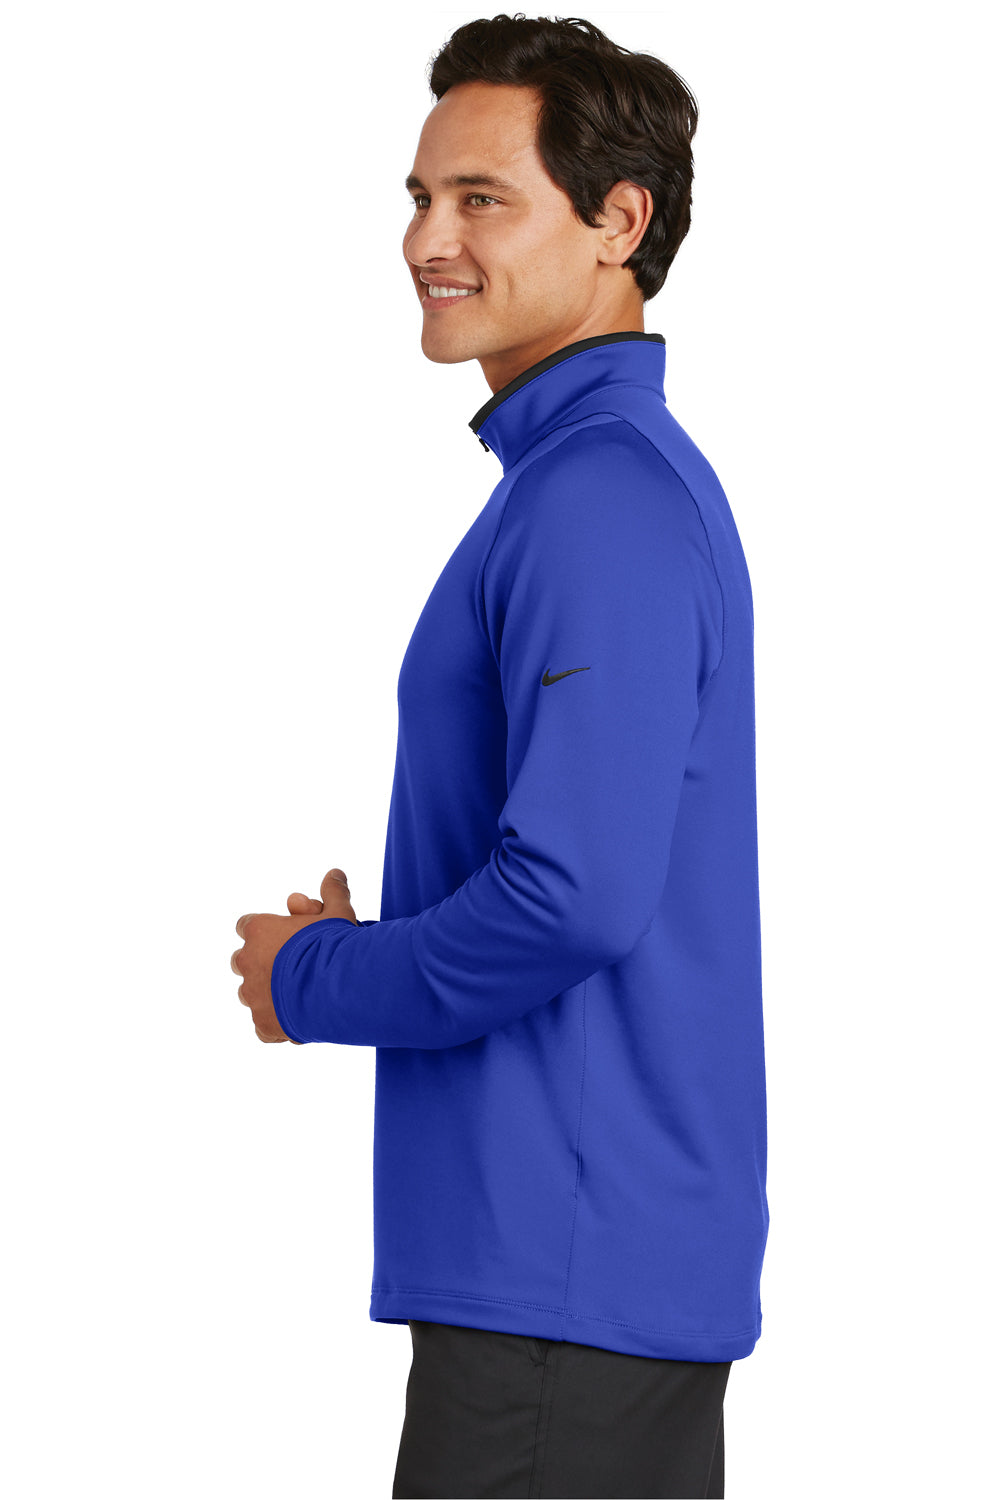 Nike 779795 Mens Dri-Fit Moisture Wicking 1/4 Zip Sweatshirt Royal Blue/Black Model Side